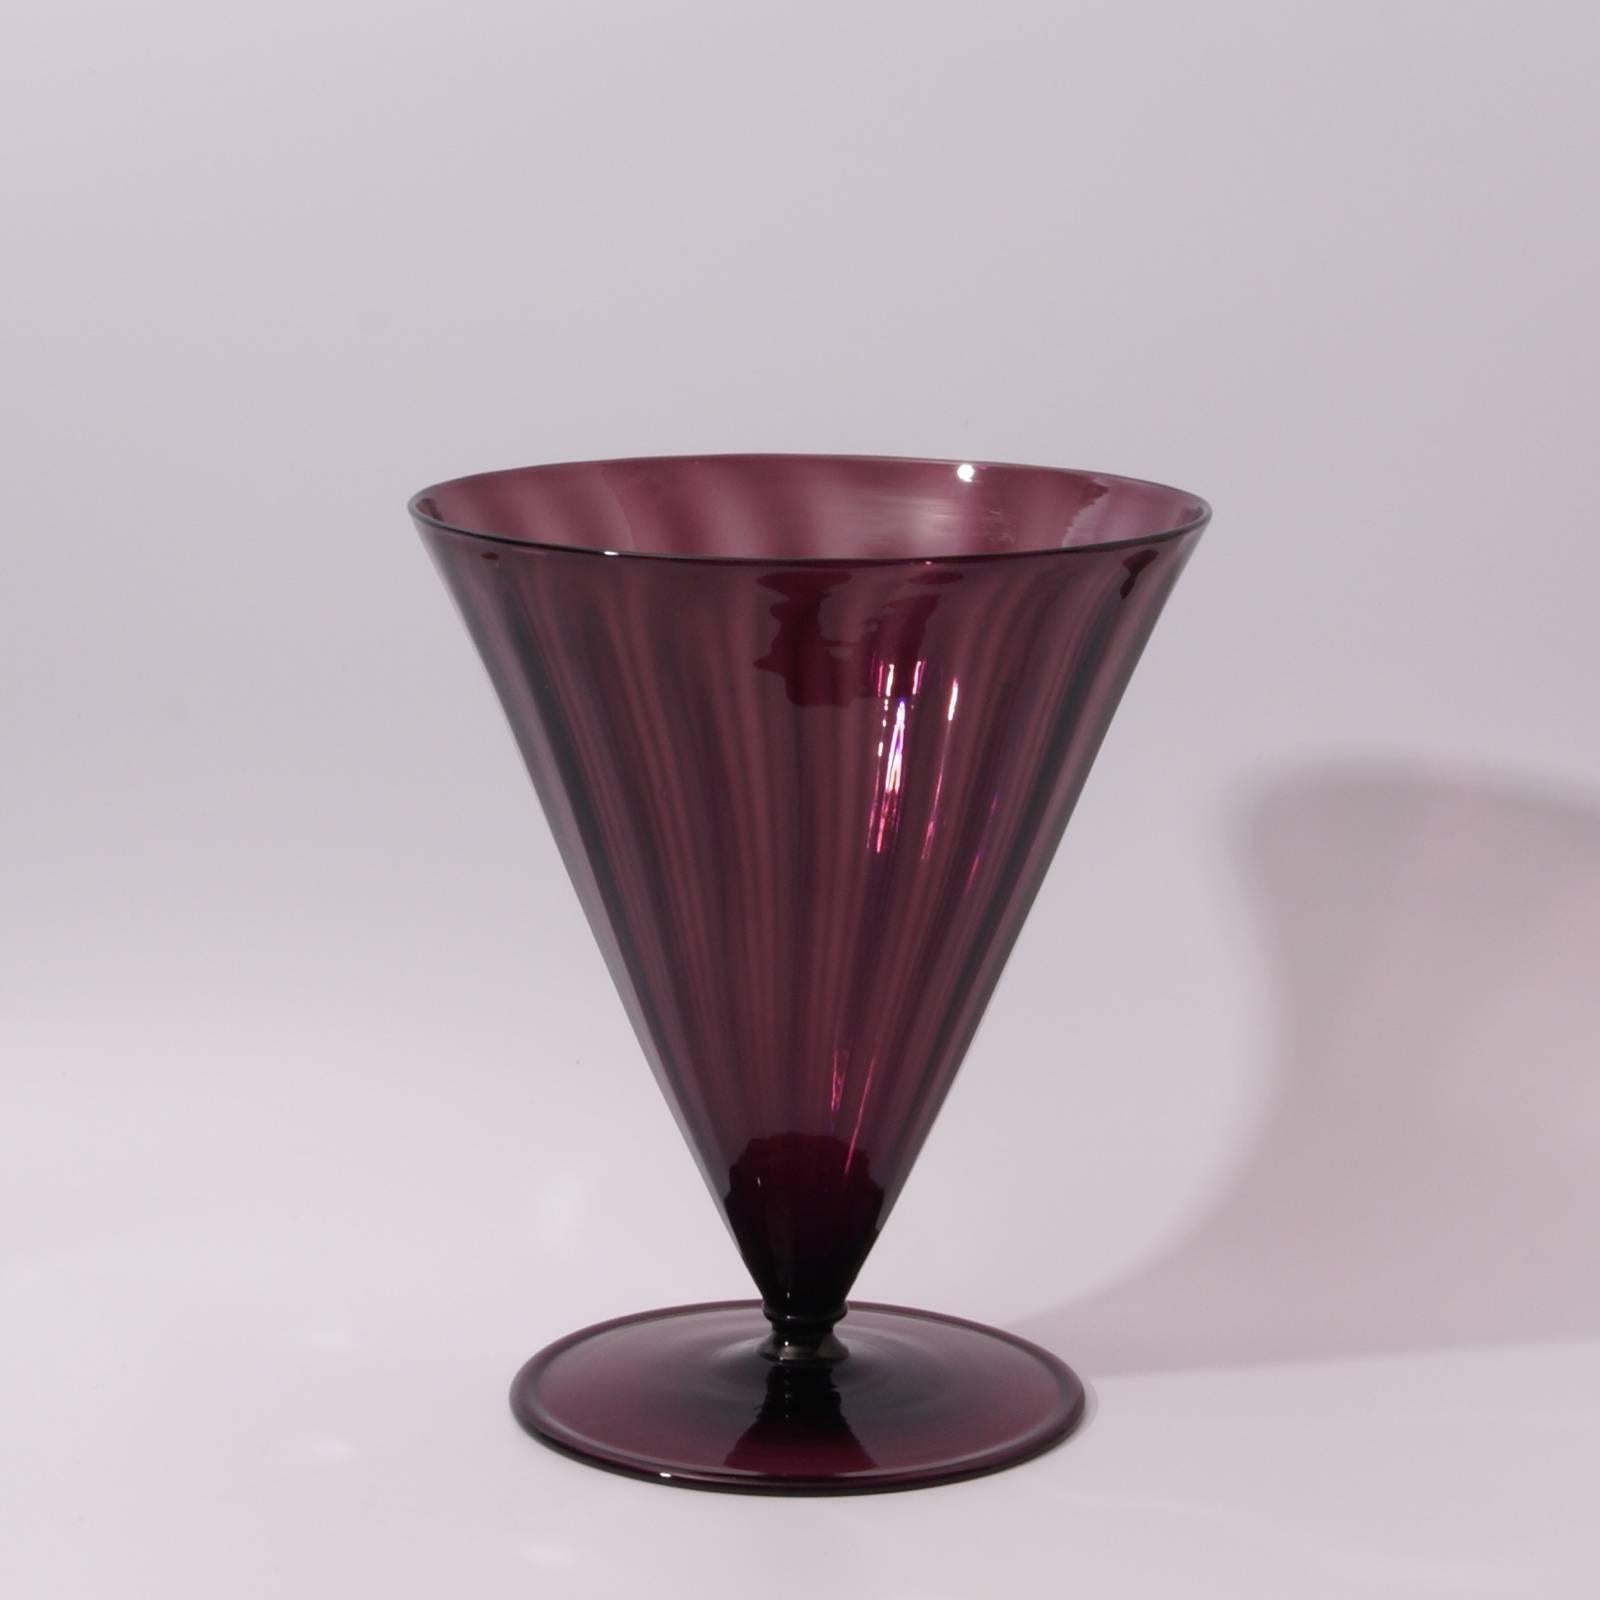 Large amethyst clear soffiati glass vase, designed by Napoleone Martinuzzi for Venini (Murano) in 1927, model n° 3145 illustrated in 